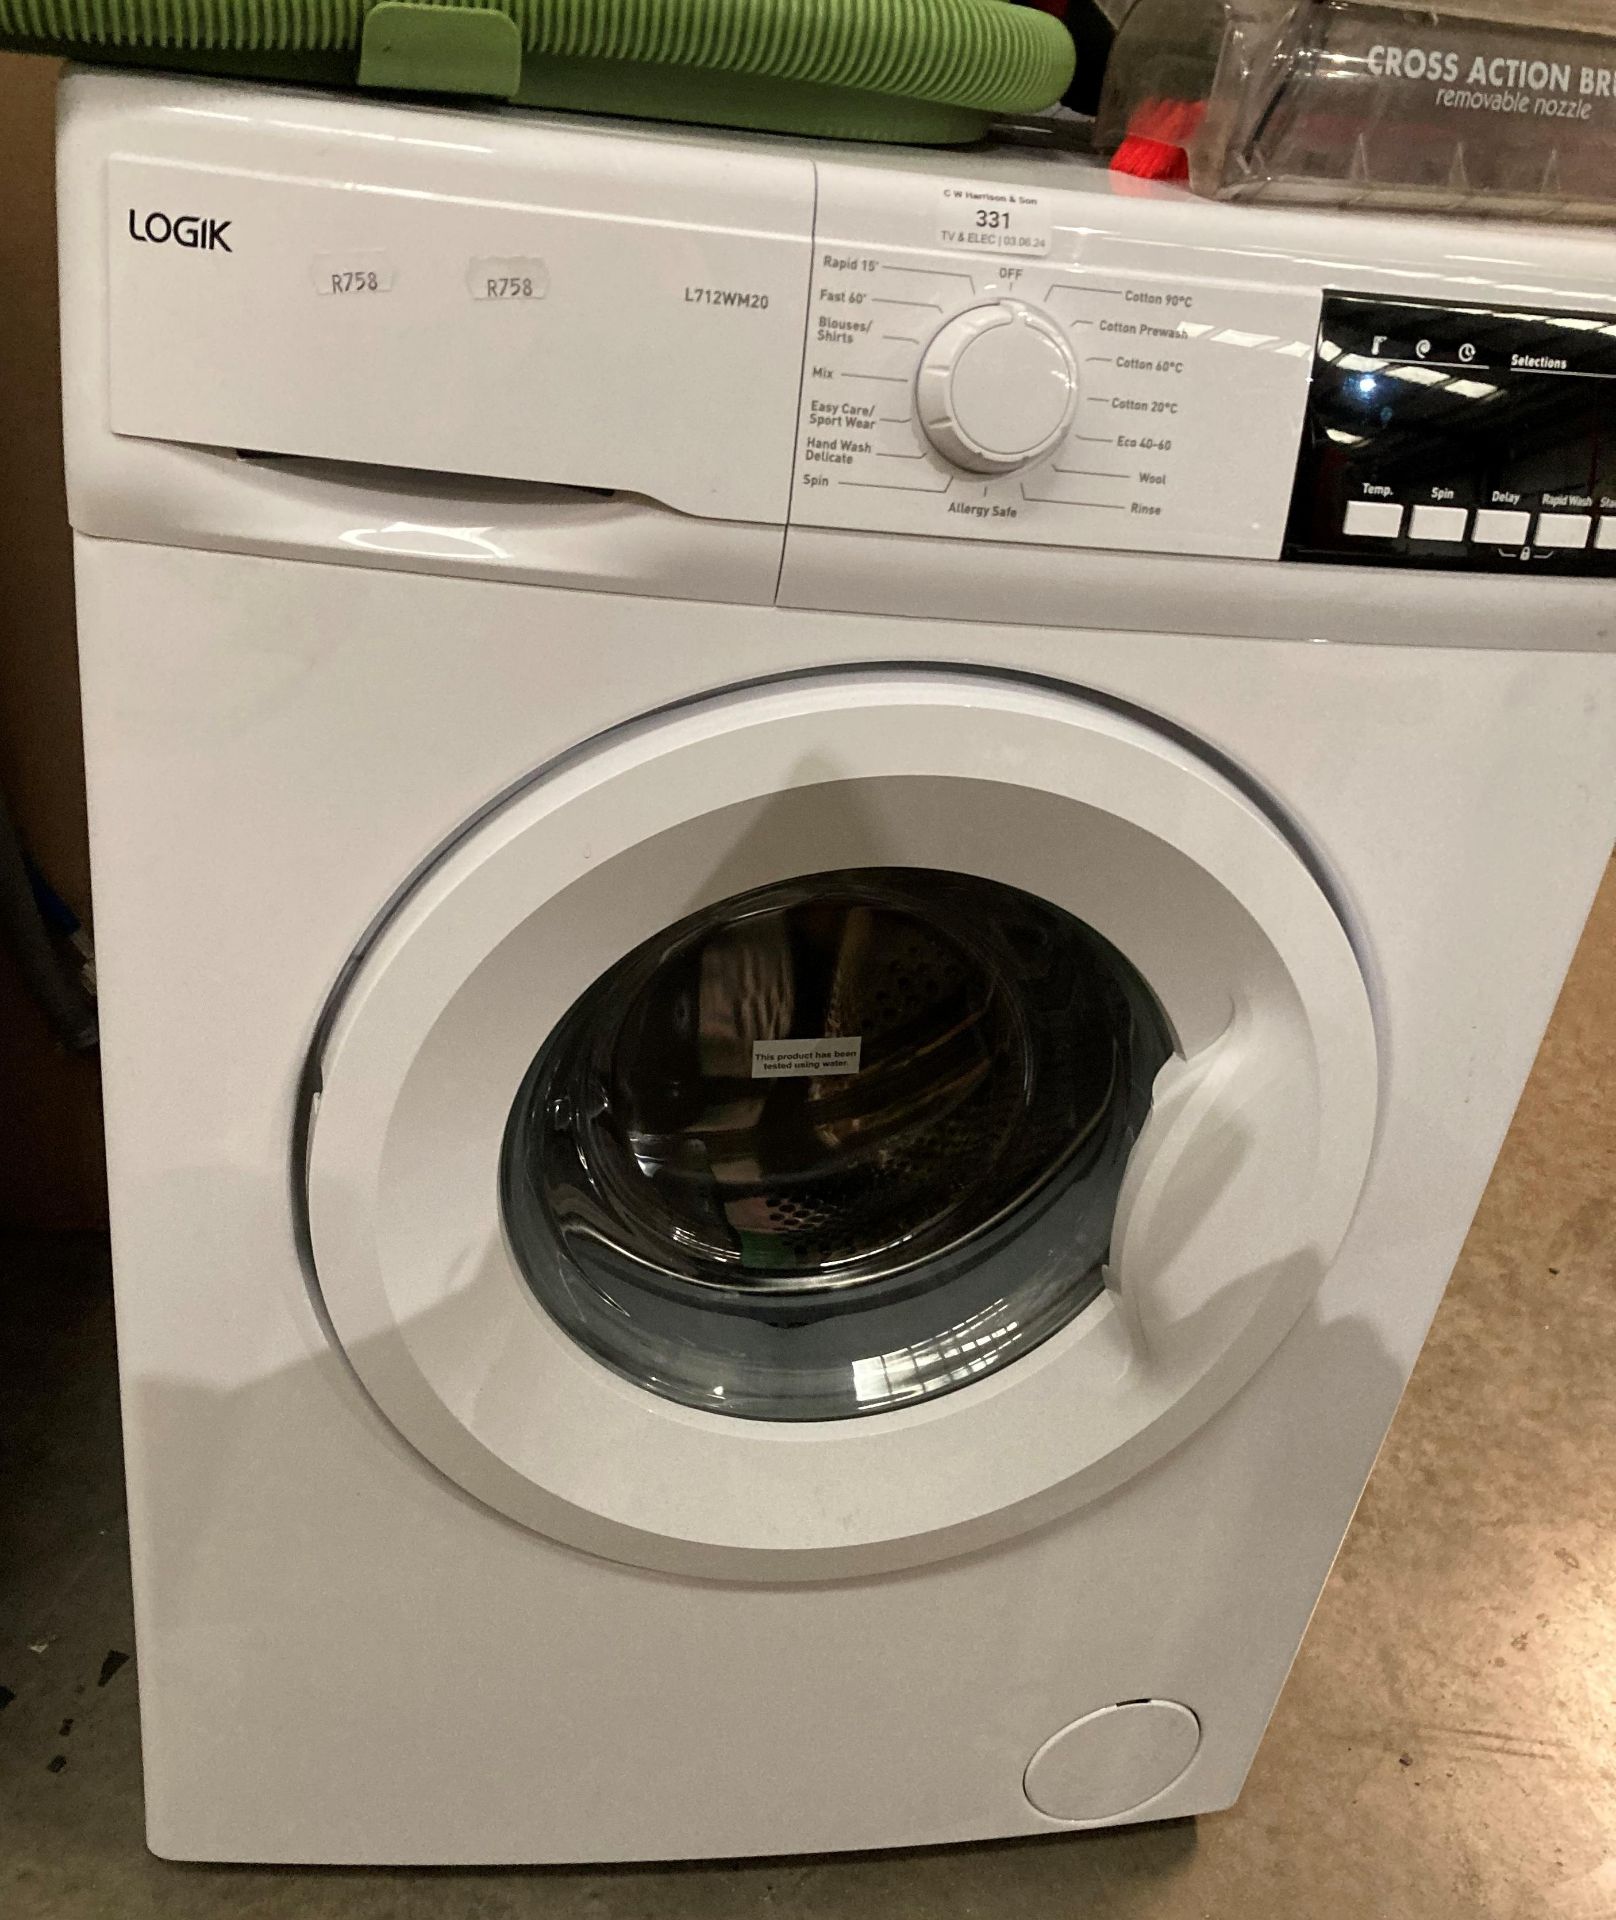 Logik L712MW20 washing machine (PO)